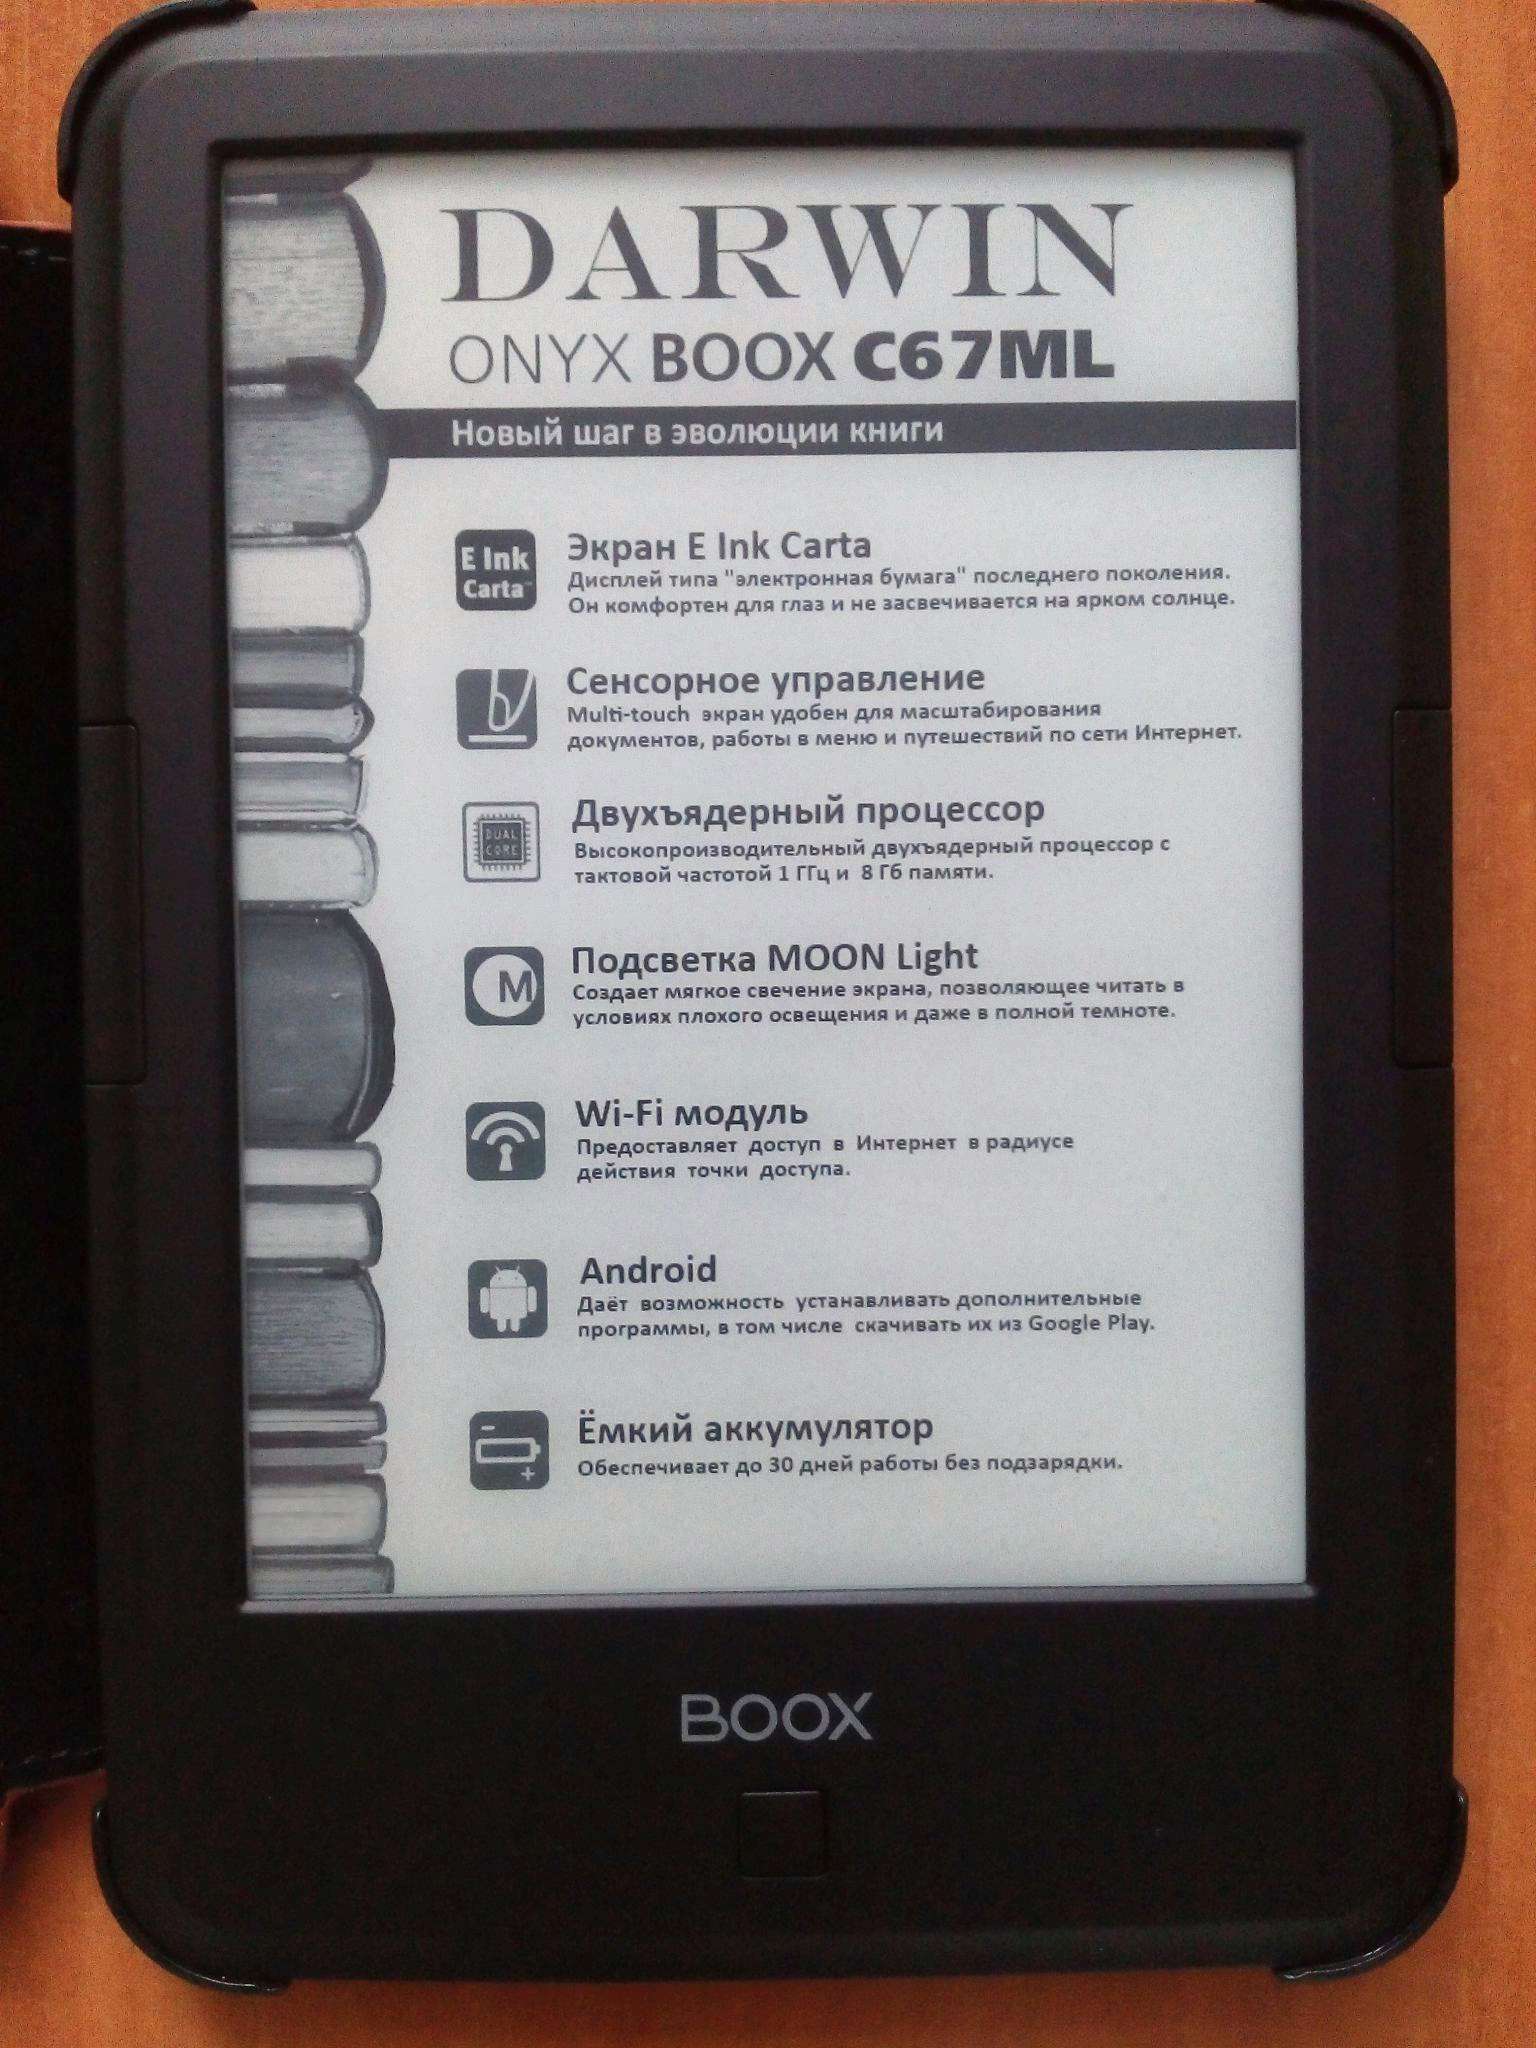 Электронная книга onyx отзывы. Onyx BOOX c67ml Darwin 8 ГБ. Электронная книга Дарвин Onyx book c67ml. Onix BOOX c67ml Darwin Black. Onyx BOOX Nova Air c.